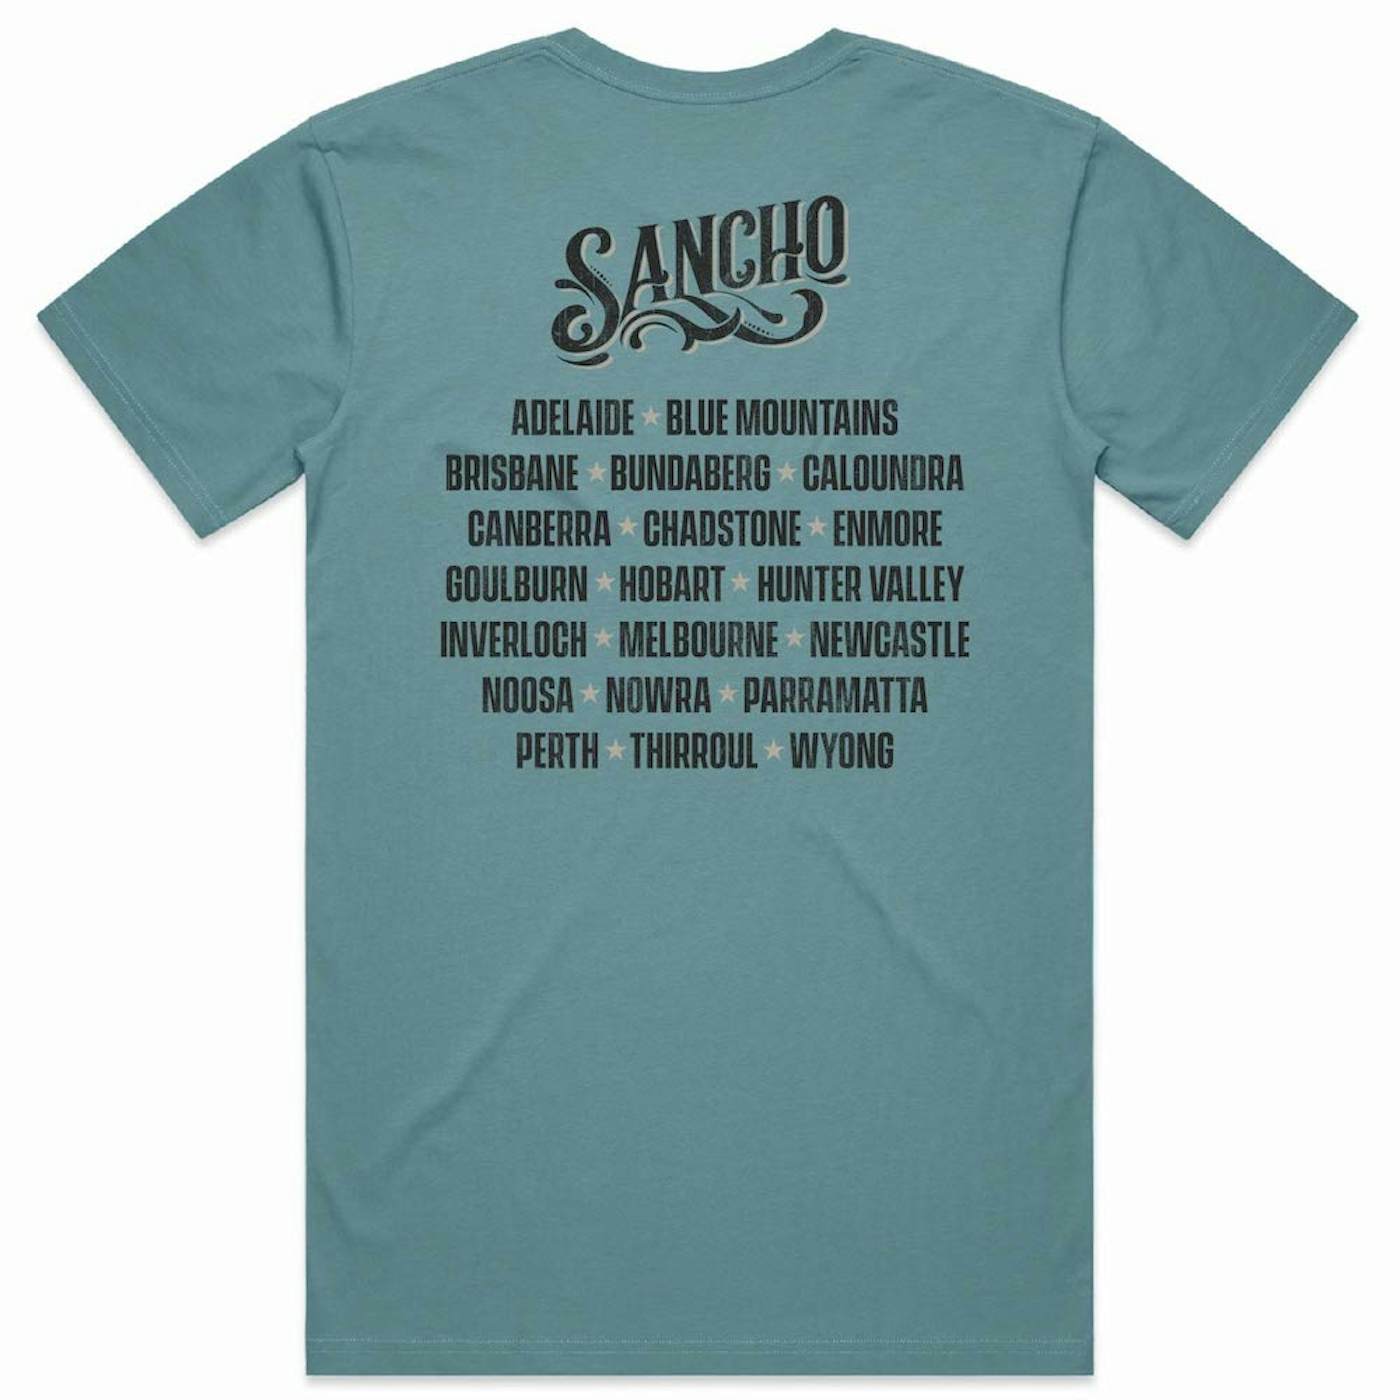 The Whitlams Sancho Tour T-Shirt (Slate Blue)